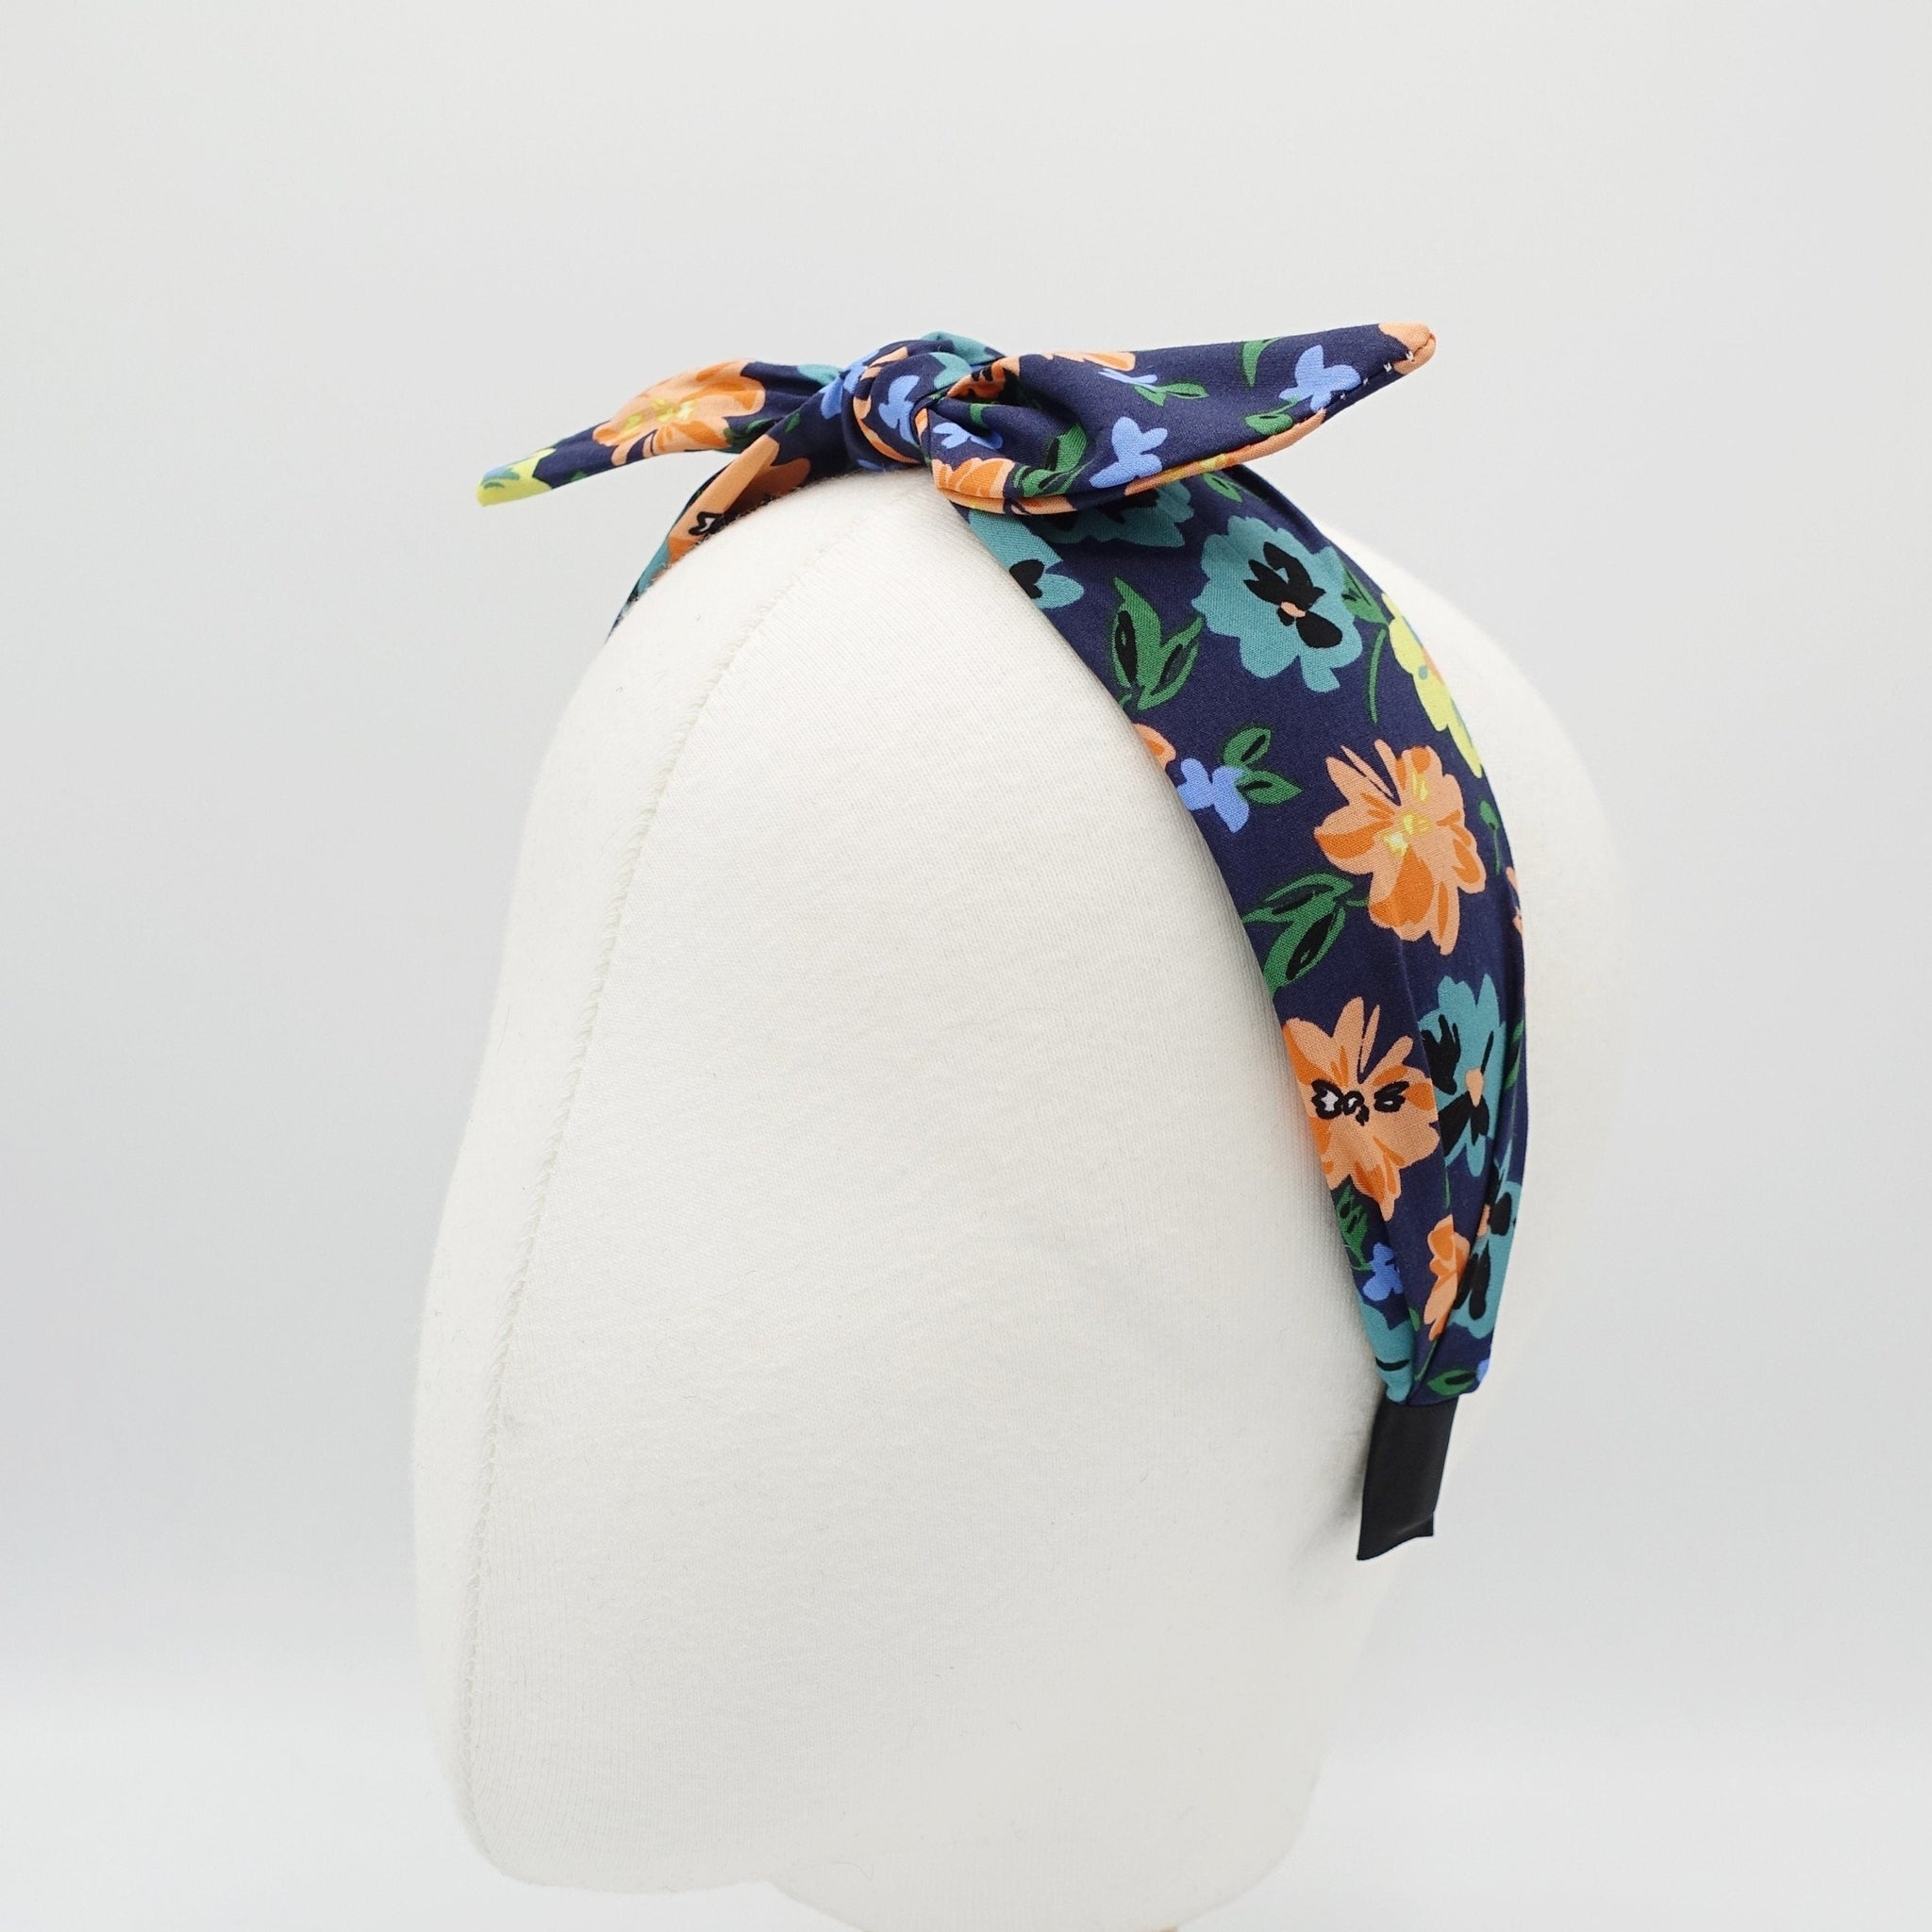 veryshine.com Headband vivid Spring headband floral print wired bow hairband casual hair accessory for women